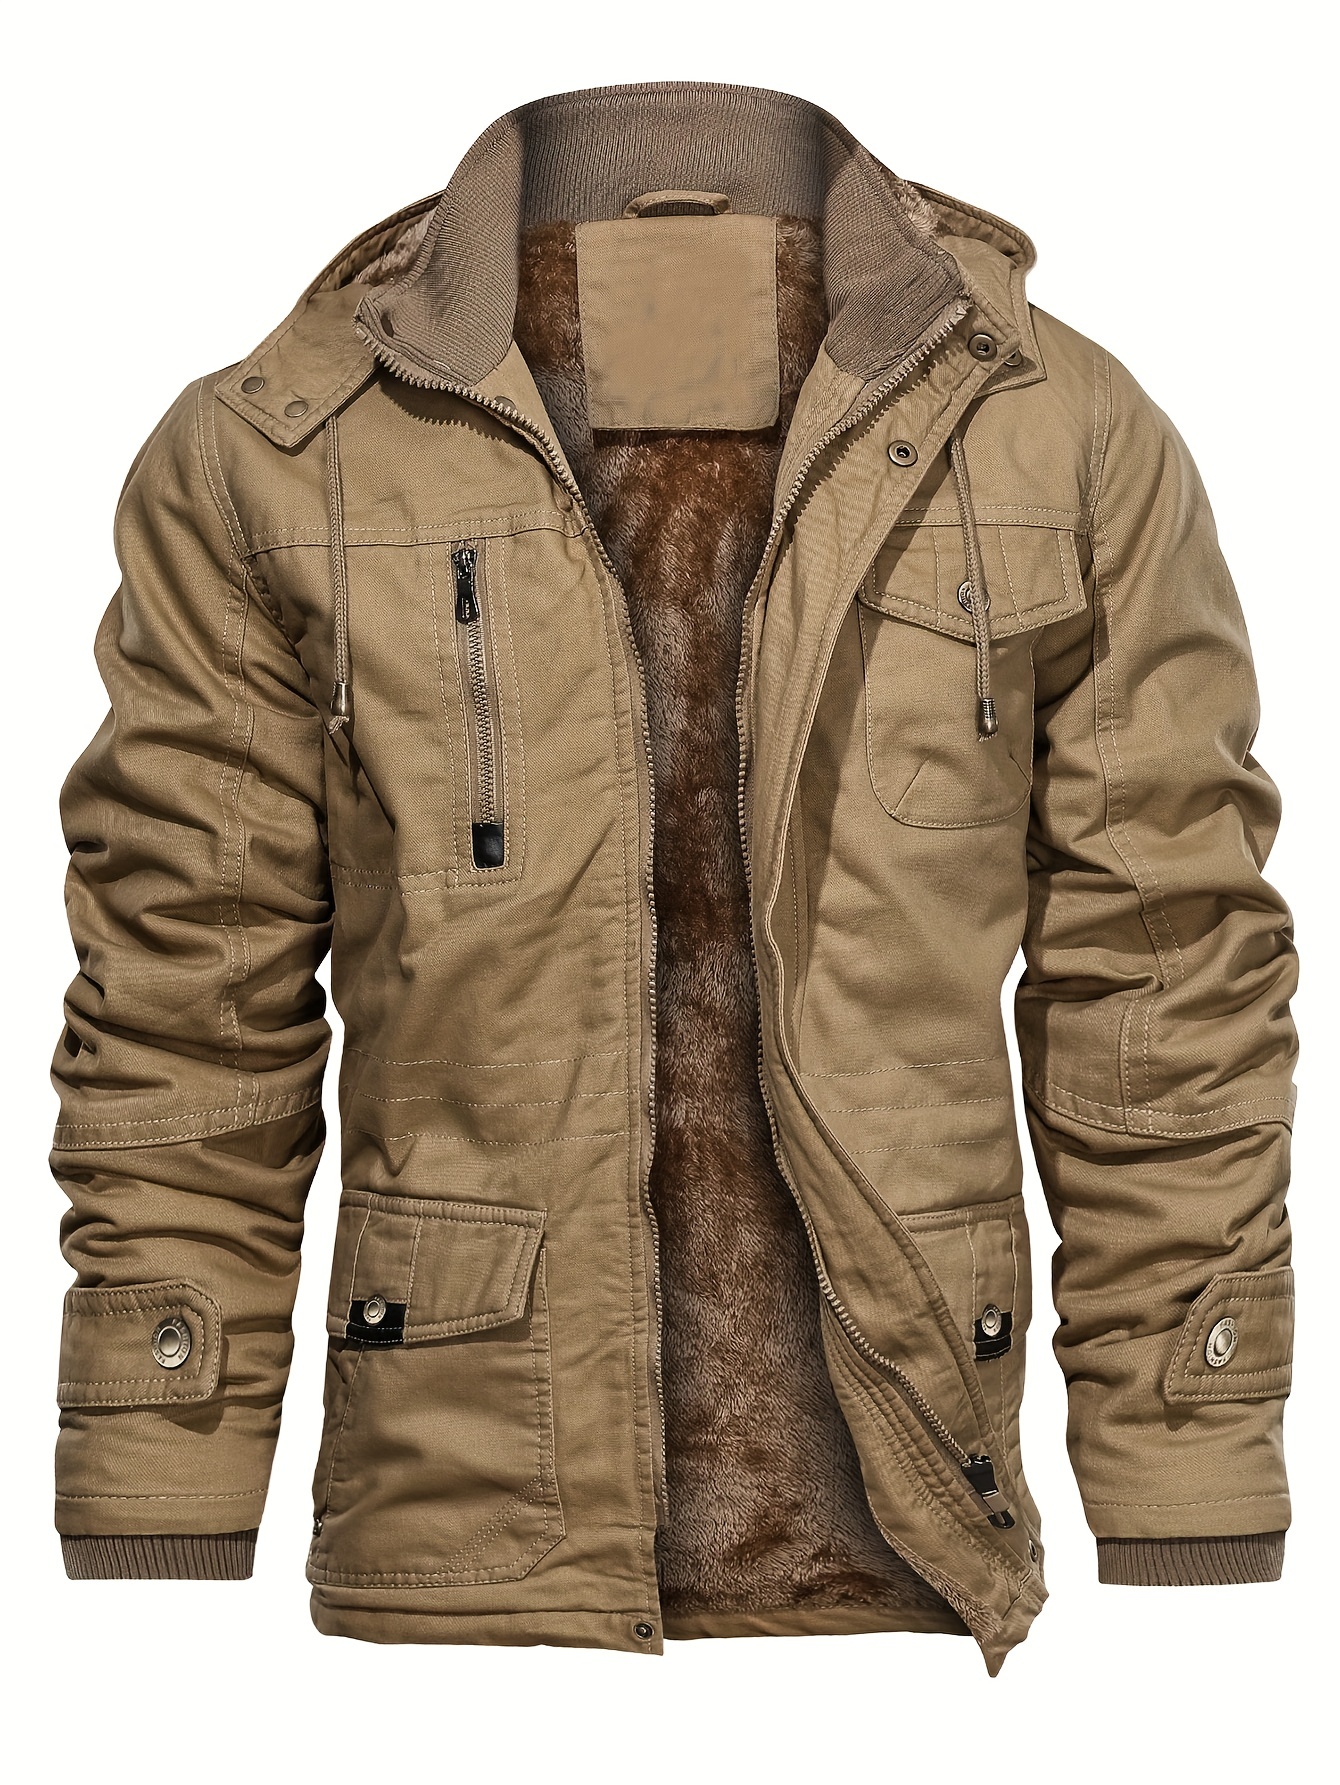 Men's Winter Cotton Jacket Warm Fleece Lined Casual Cargo Work Multi Pocket  Coat